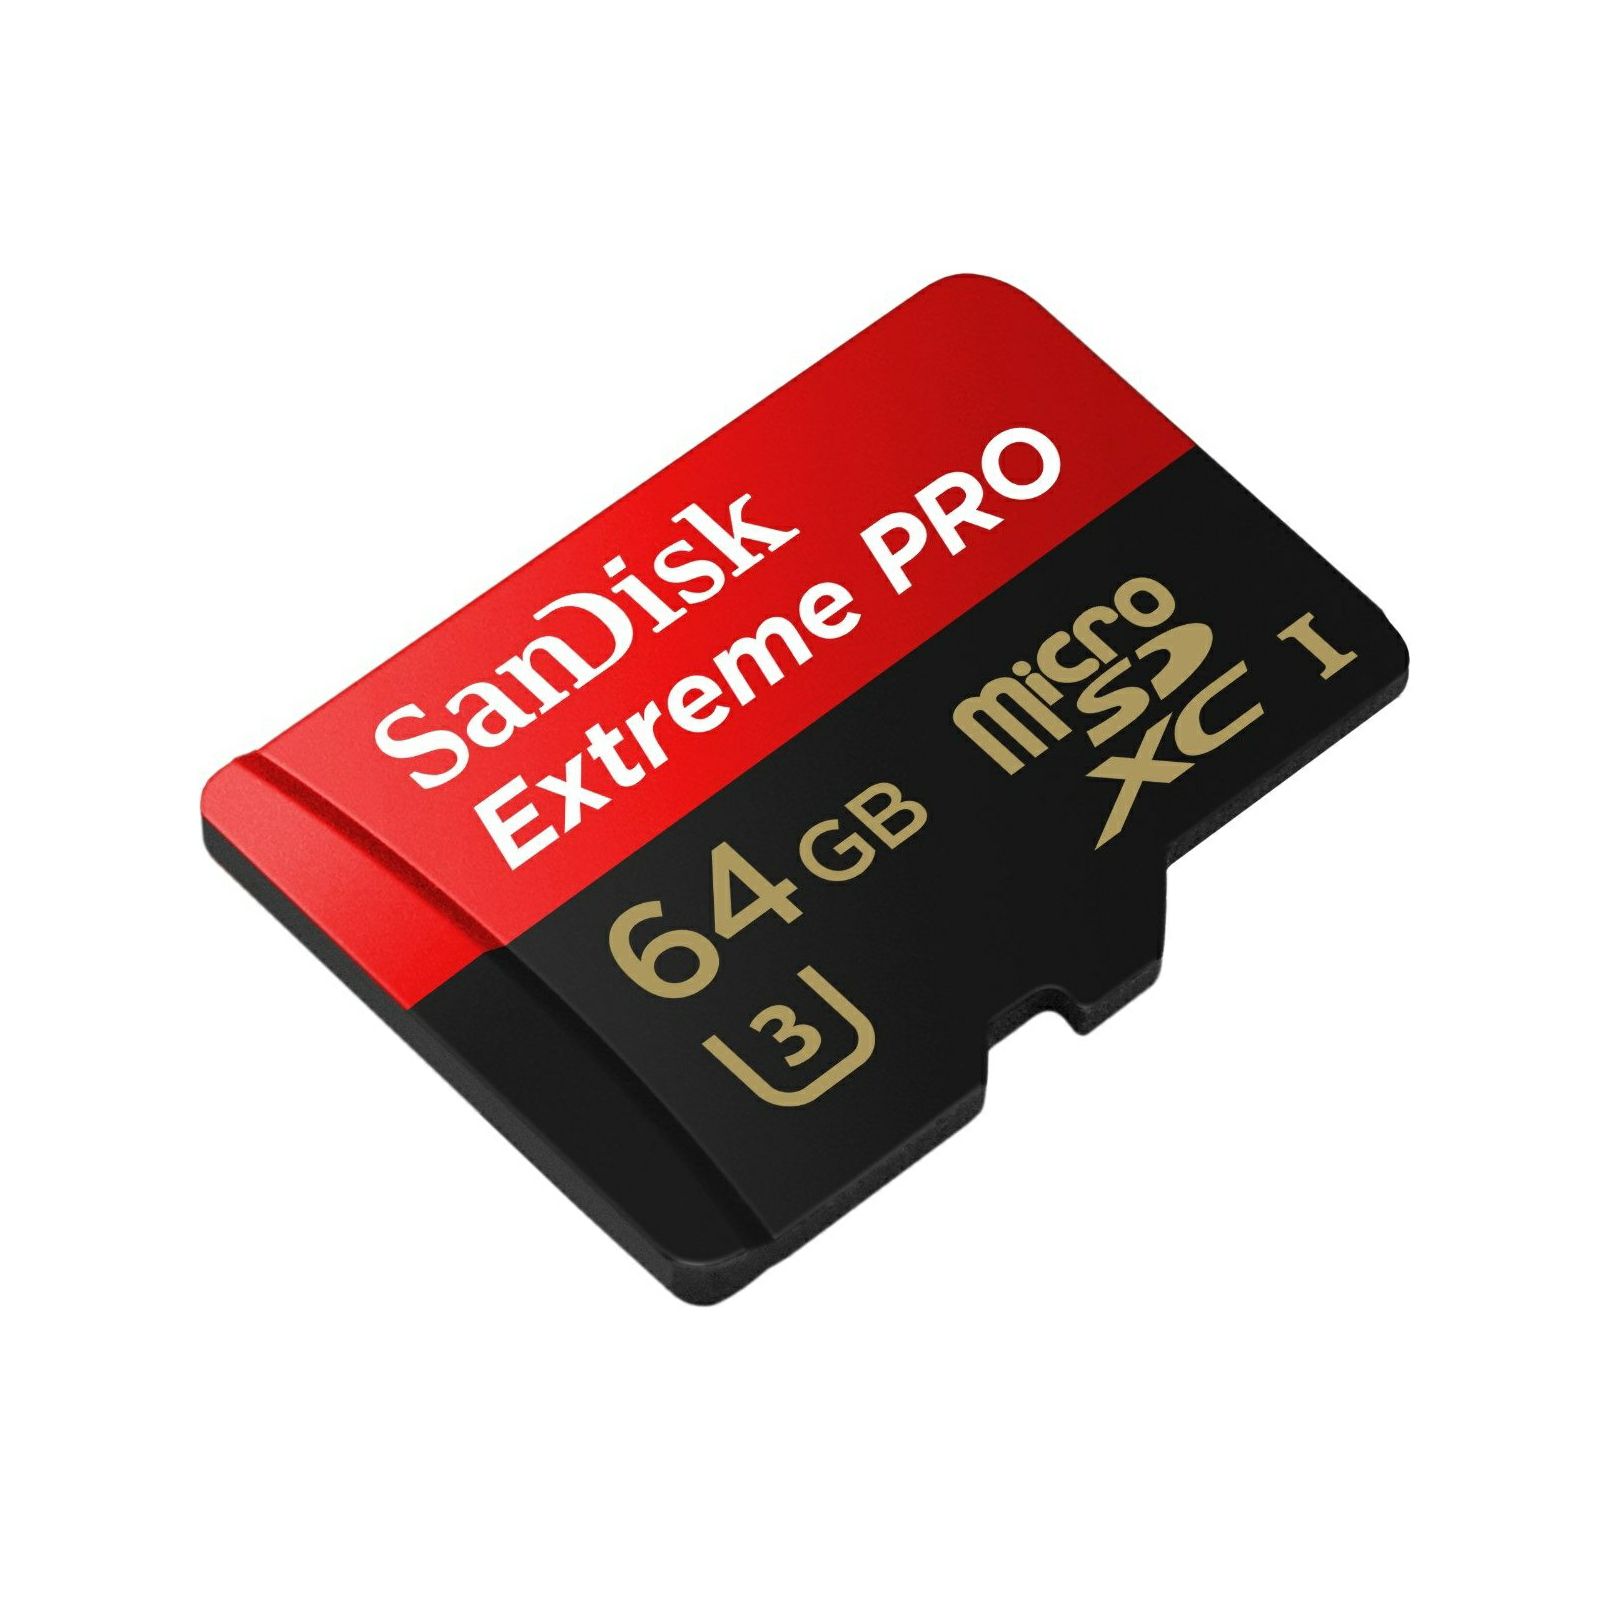 SanDisk microSDXC 64GB Extreme Pro 95MB/s Class 10 UHS-I U3 SDSDQXP-064G-G46A Memorijska kartica